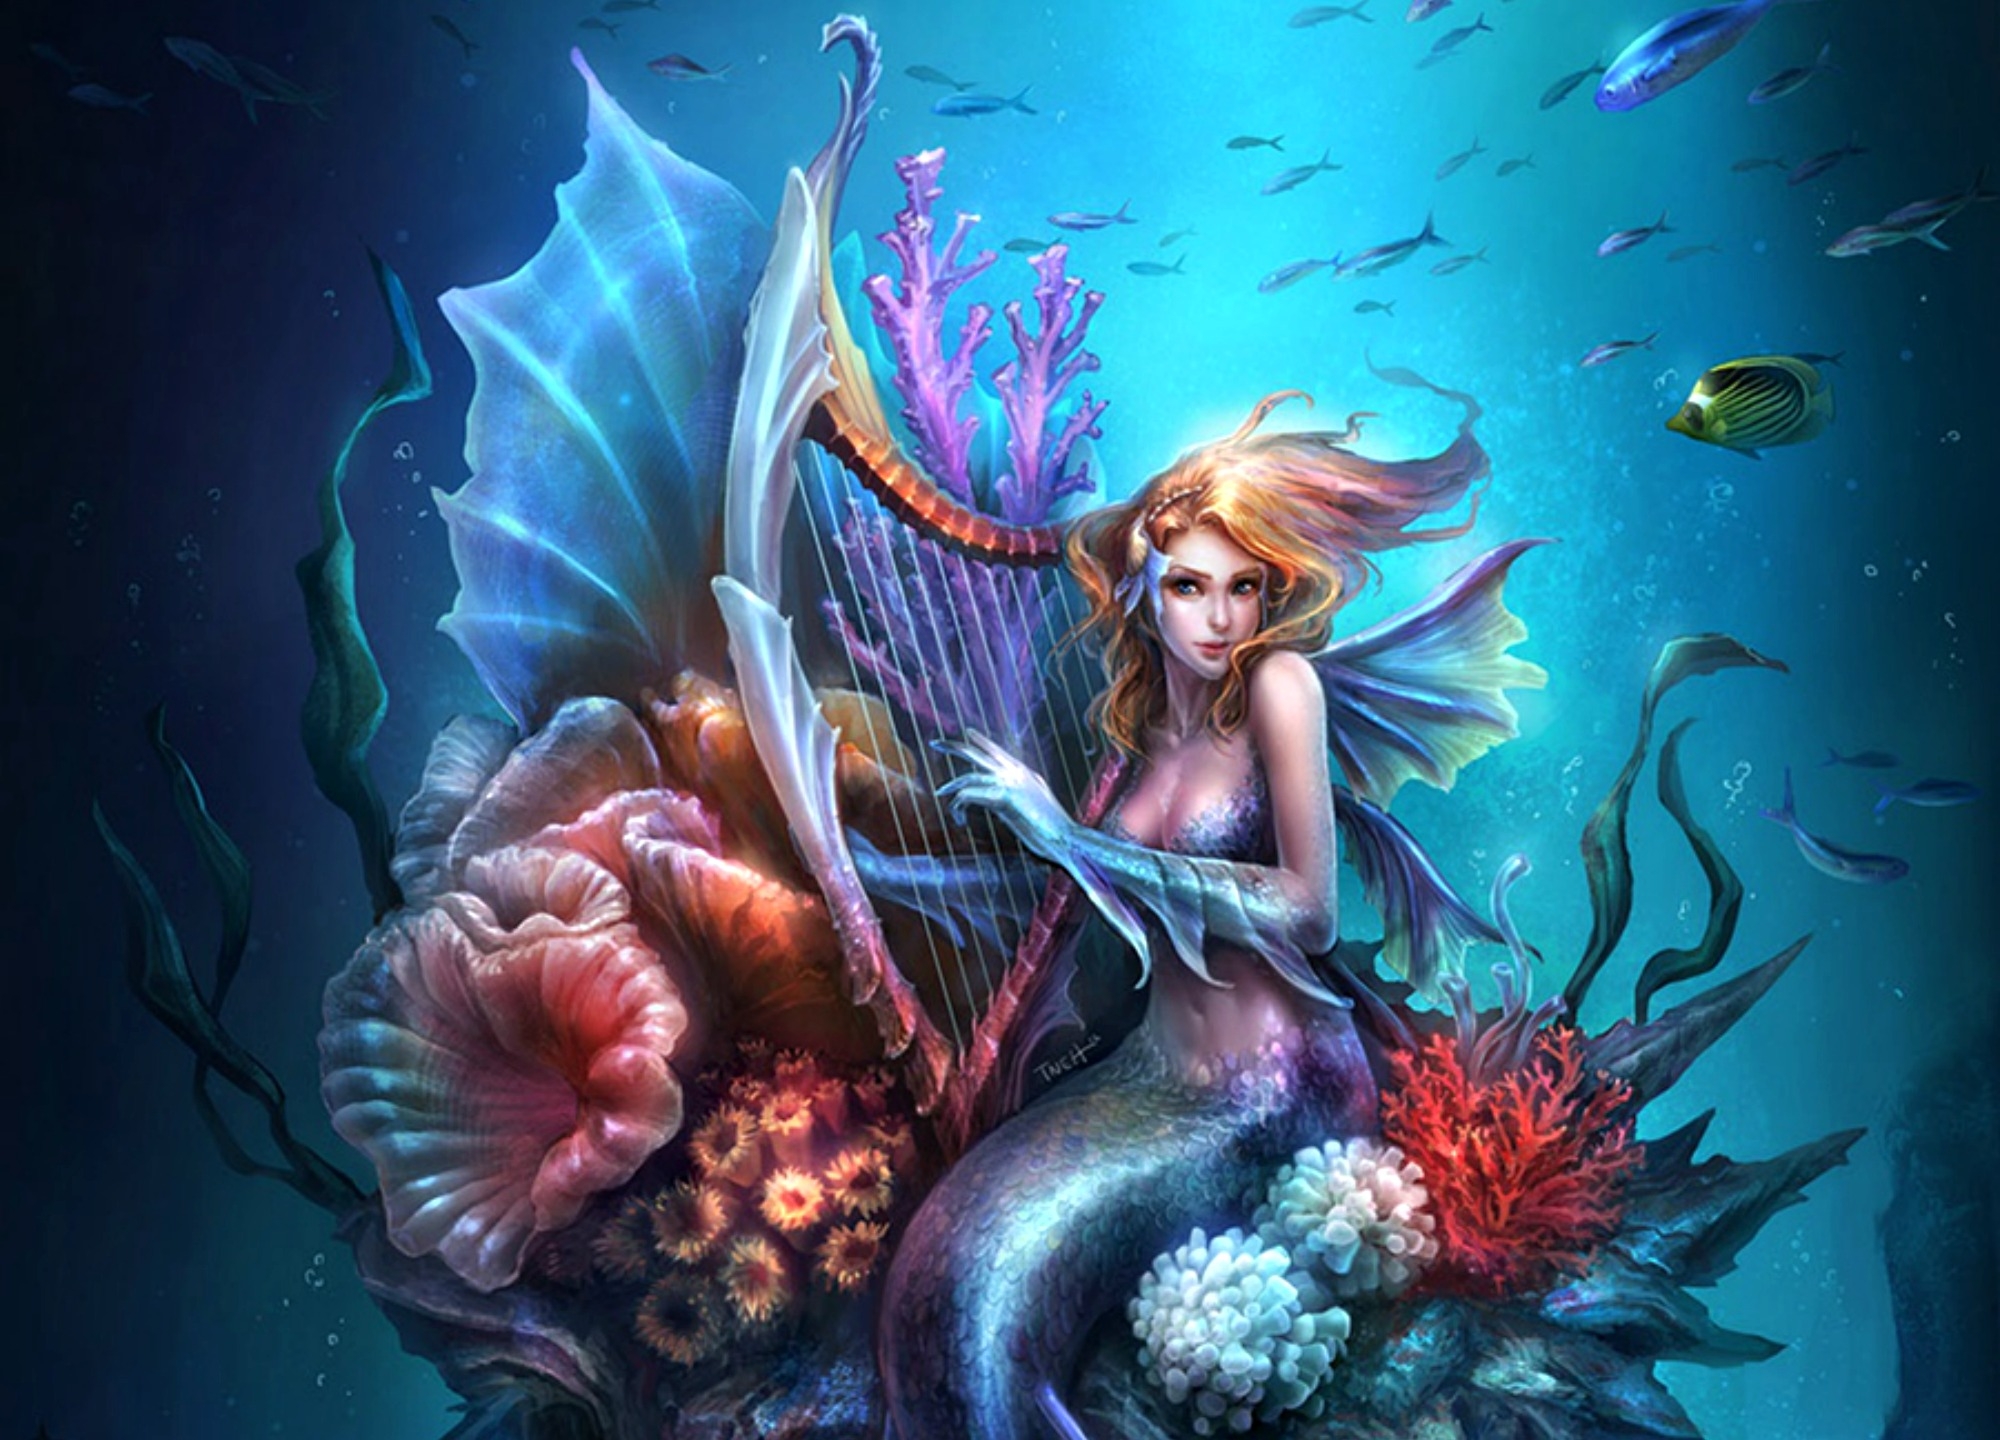 Mermaid - Fantasy Wallpaper (39777517) - Fanpop